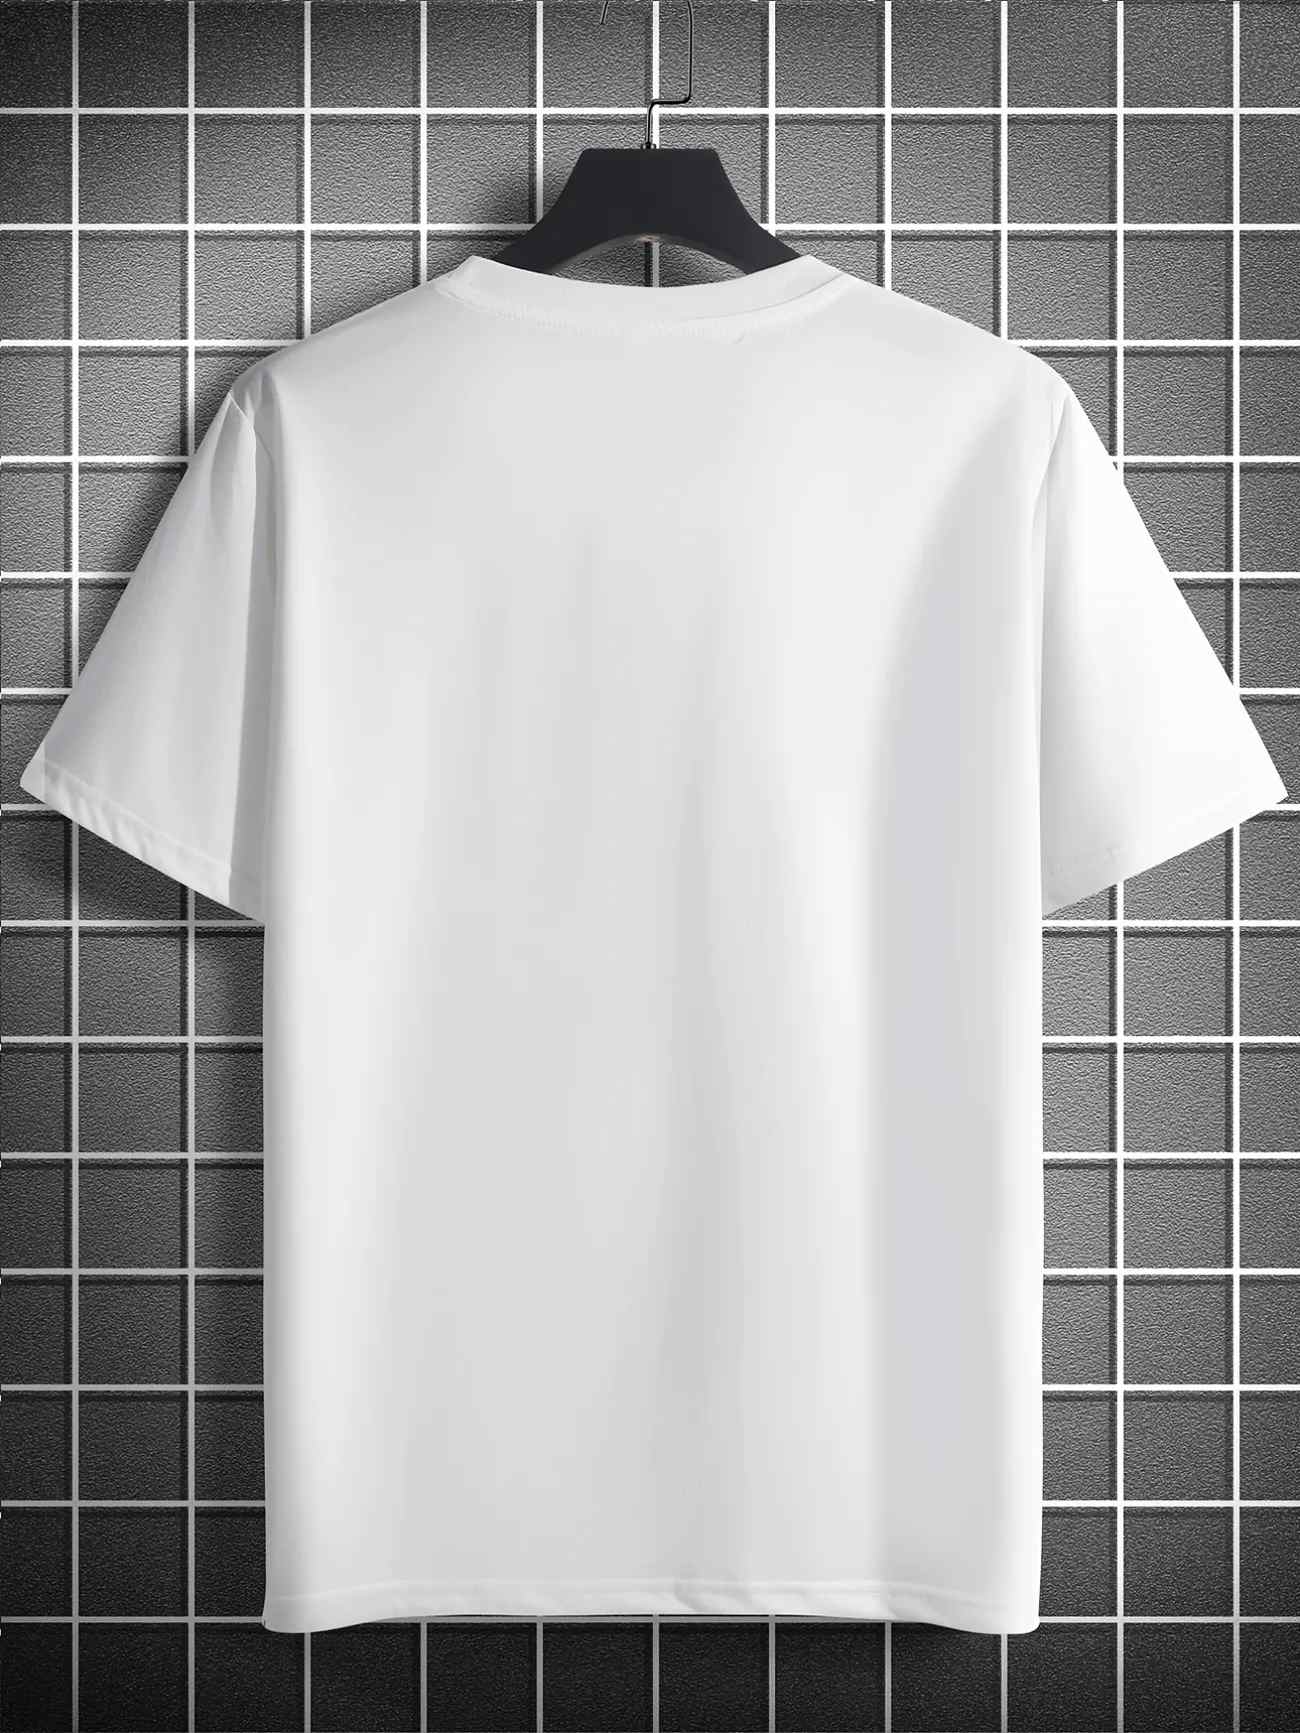 Mens Cotton Sticker Printed T-Shirt TTMPS80 - White